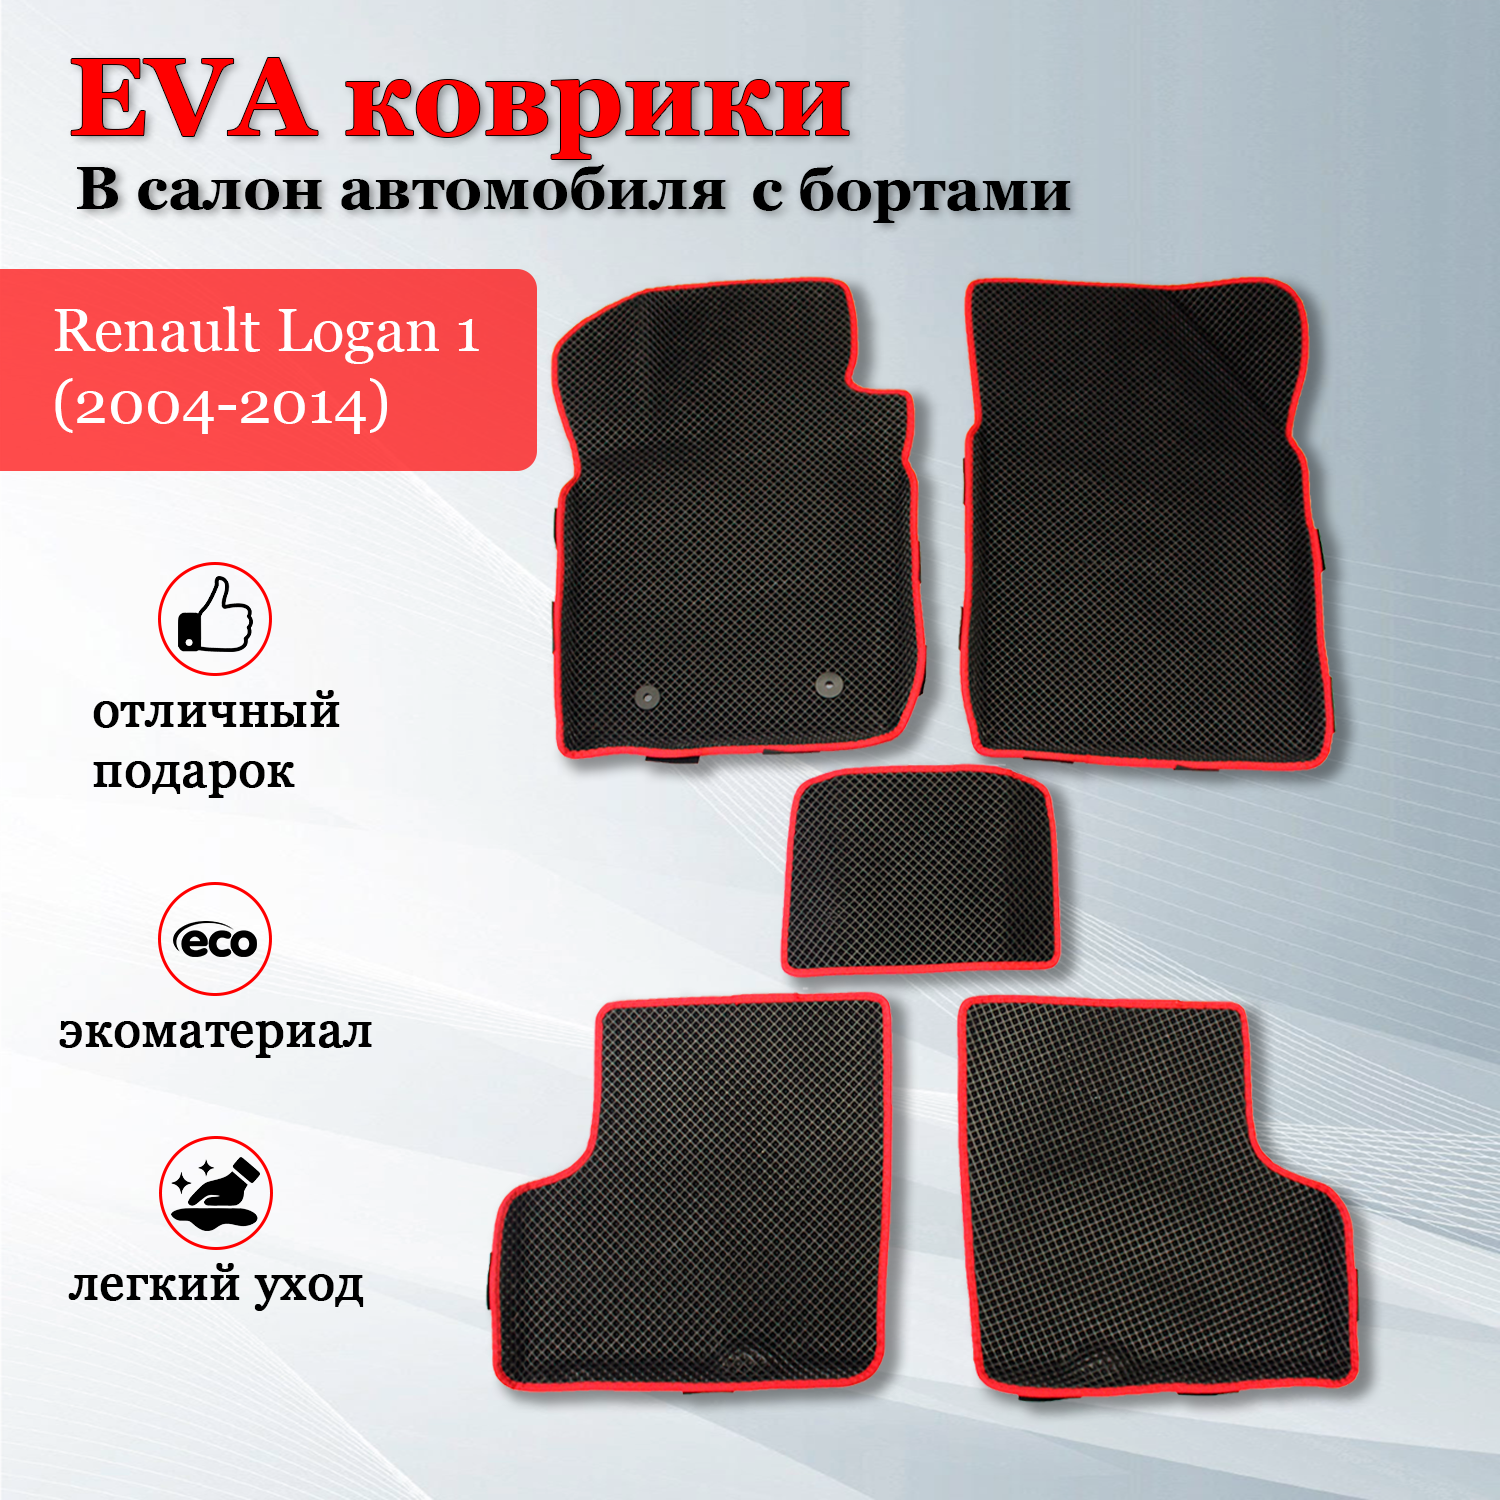 EVA (EВА ЭВА) коврики с бортами в салон автомобиля Рено Логан 1 / Renault Logan 1 (2004-2014)